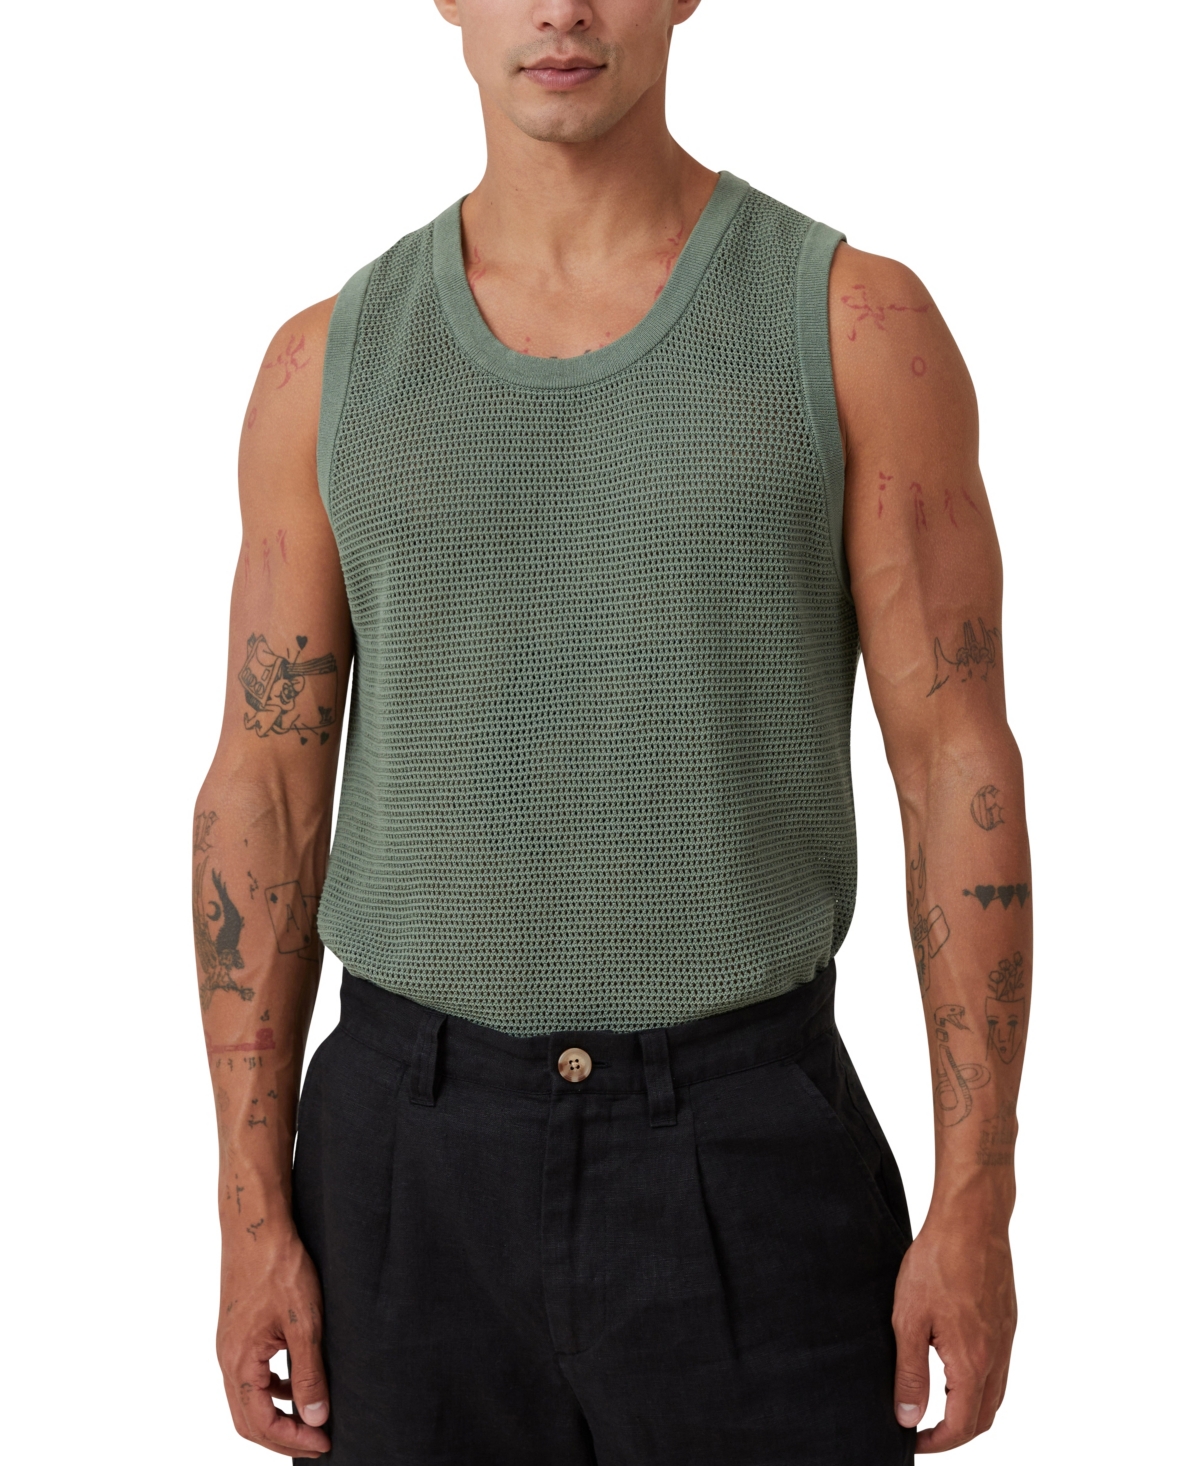 Men's Knit Tank Top - Green